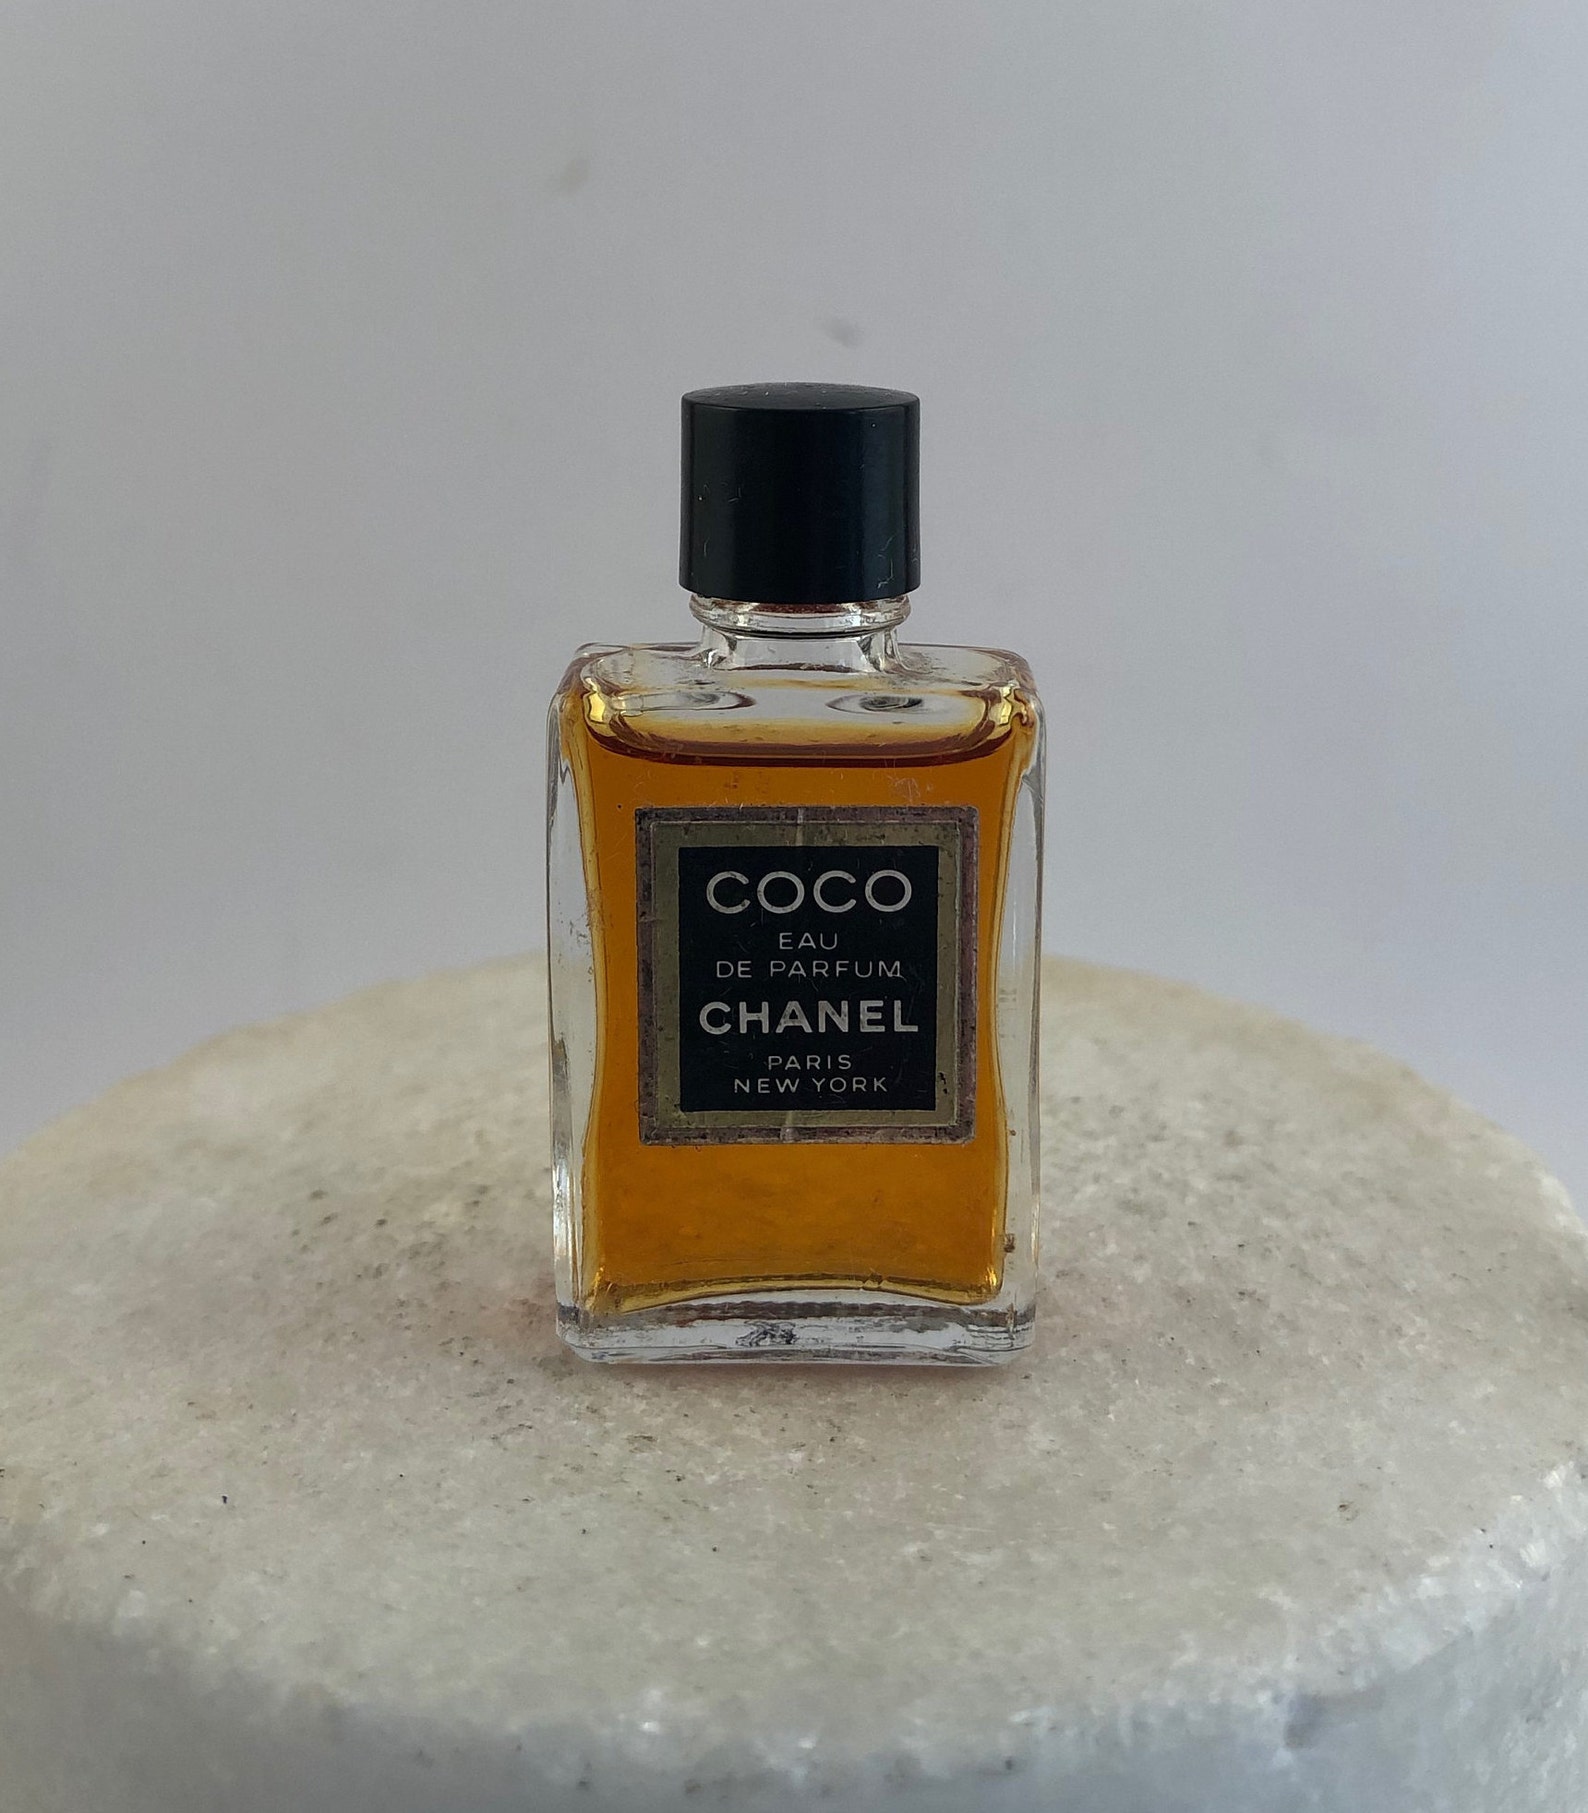 Coco Eau de Parfum Chanel Paris Винтаж. 4 Мл Парфюм. Духи Олд мен. Духи Шанель Винтаж масло.